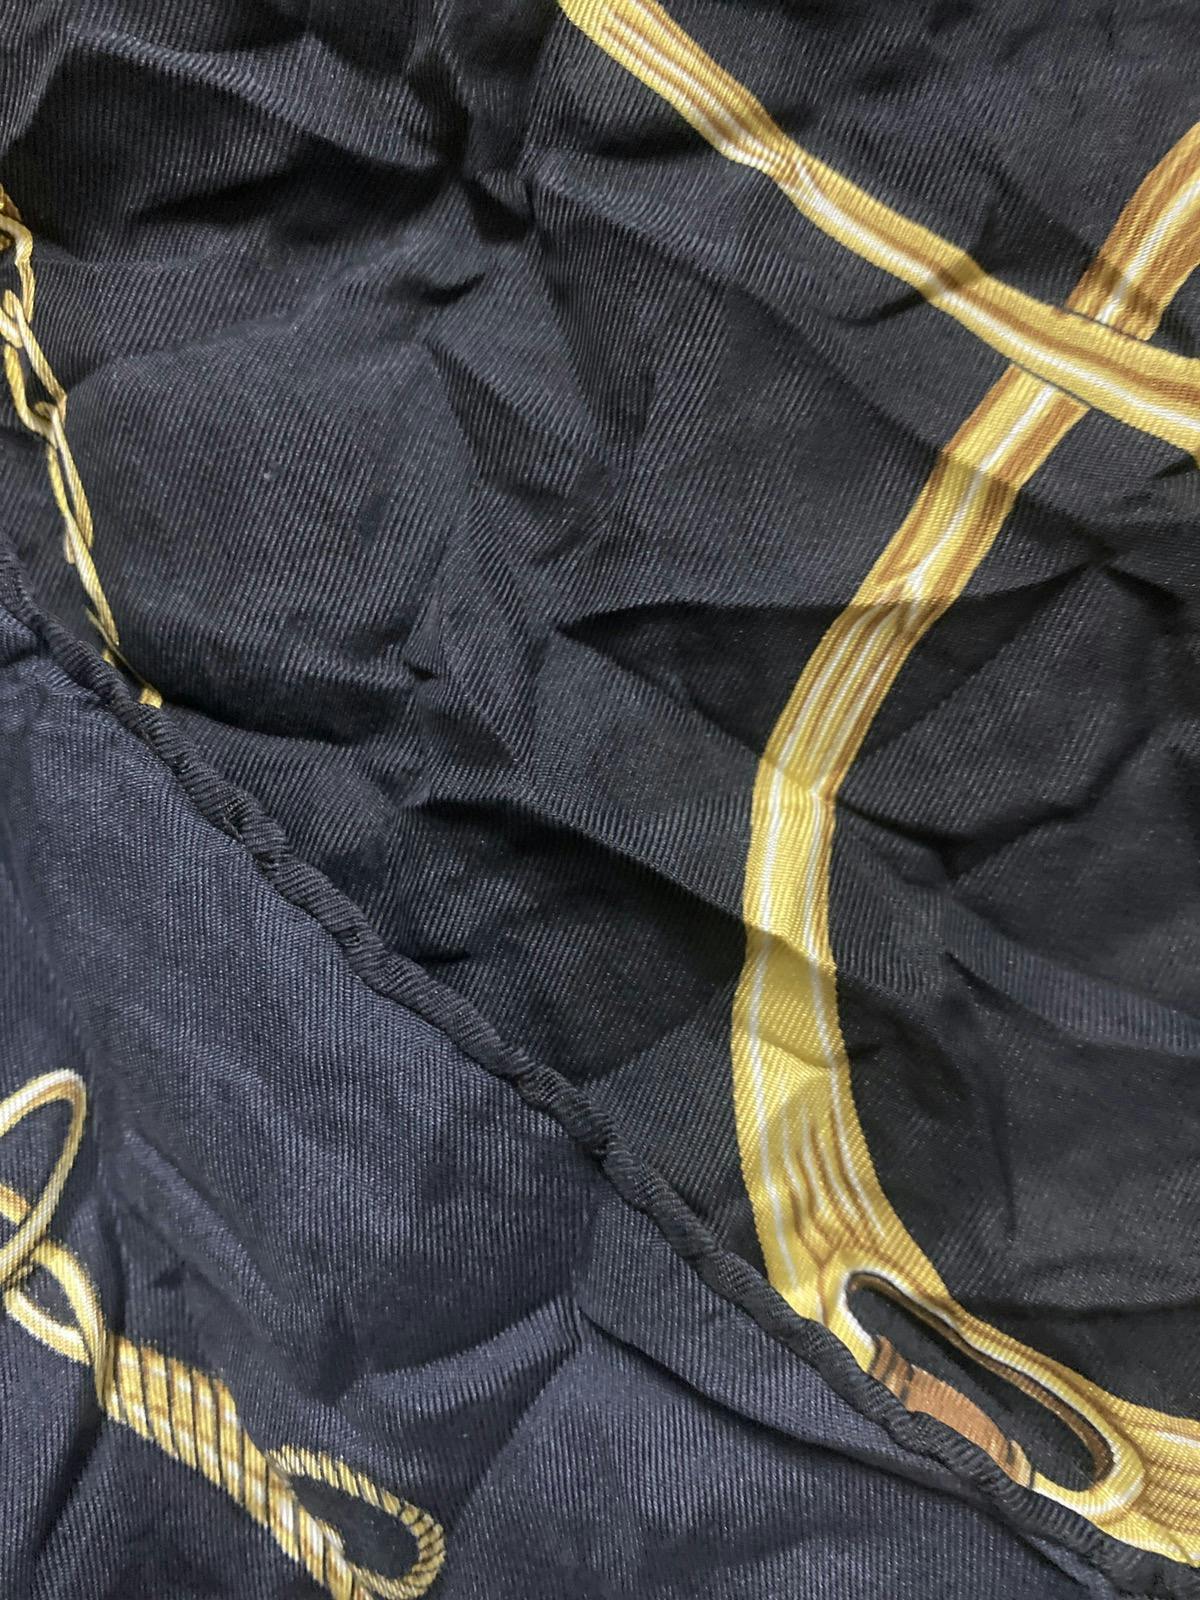 Vintage Longchamp Silk Scarf - 3